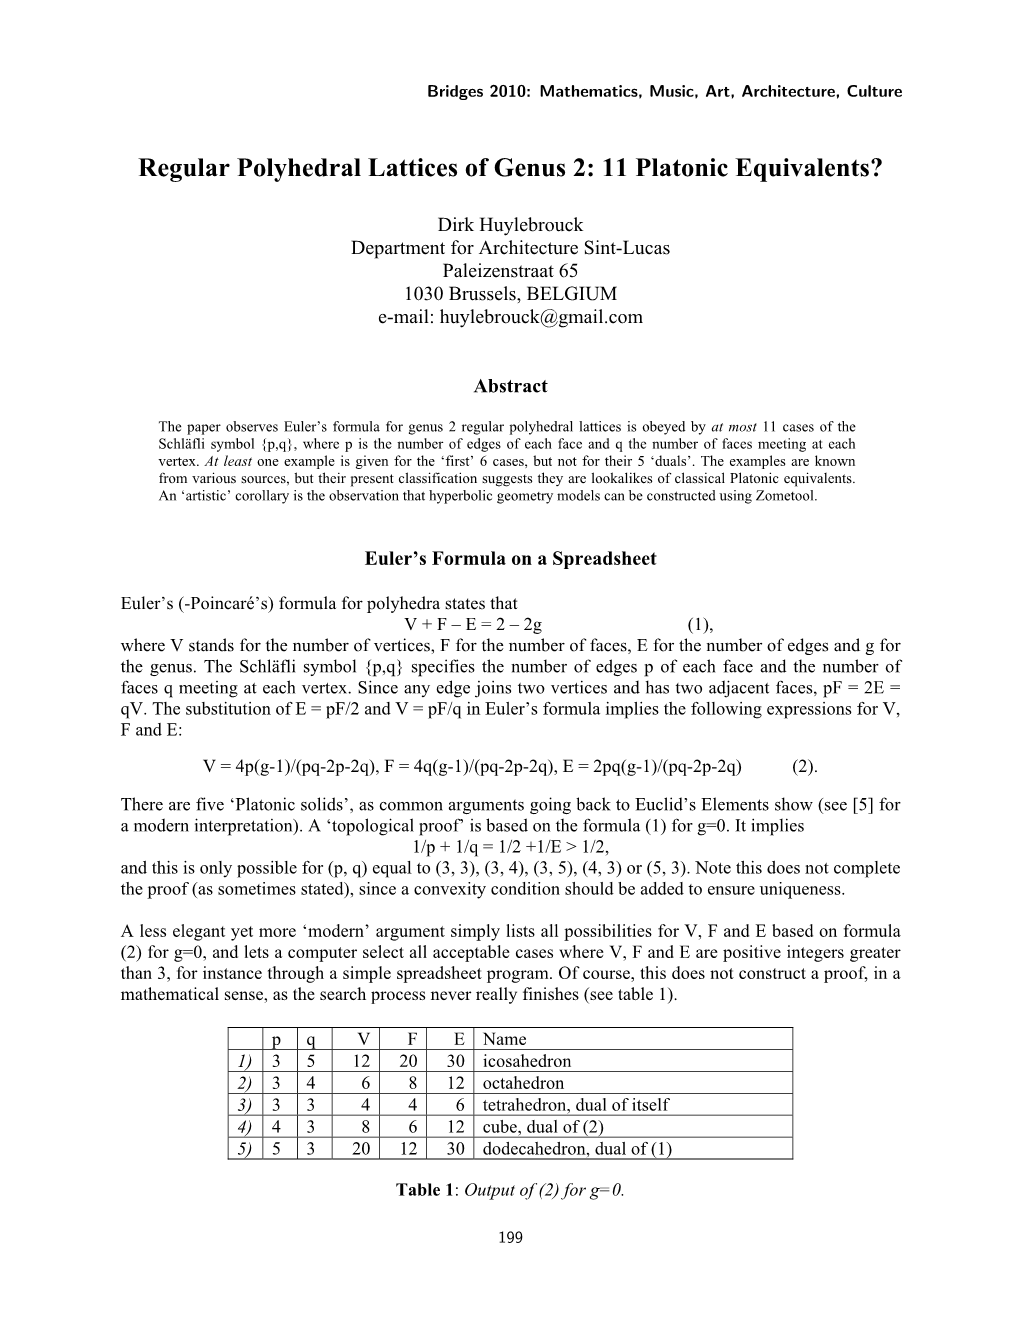 Regular Polyhedral Lattices of Genus 2: 11 Platonic Equivalents?